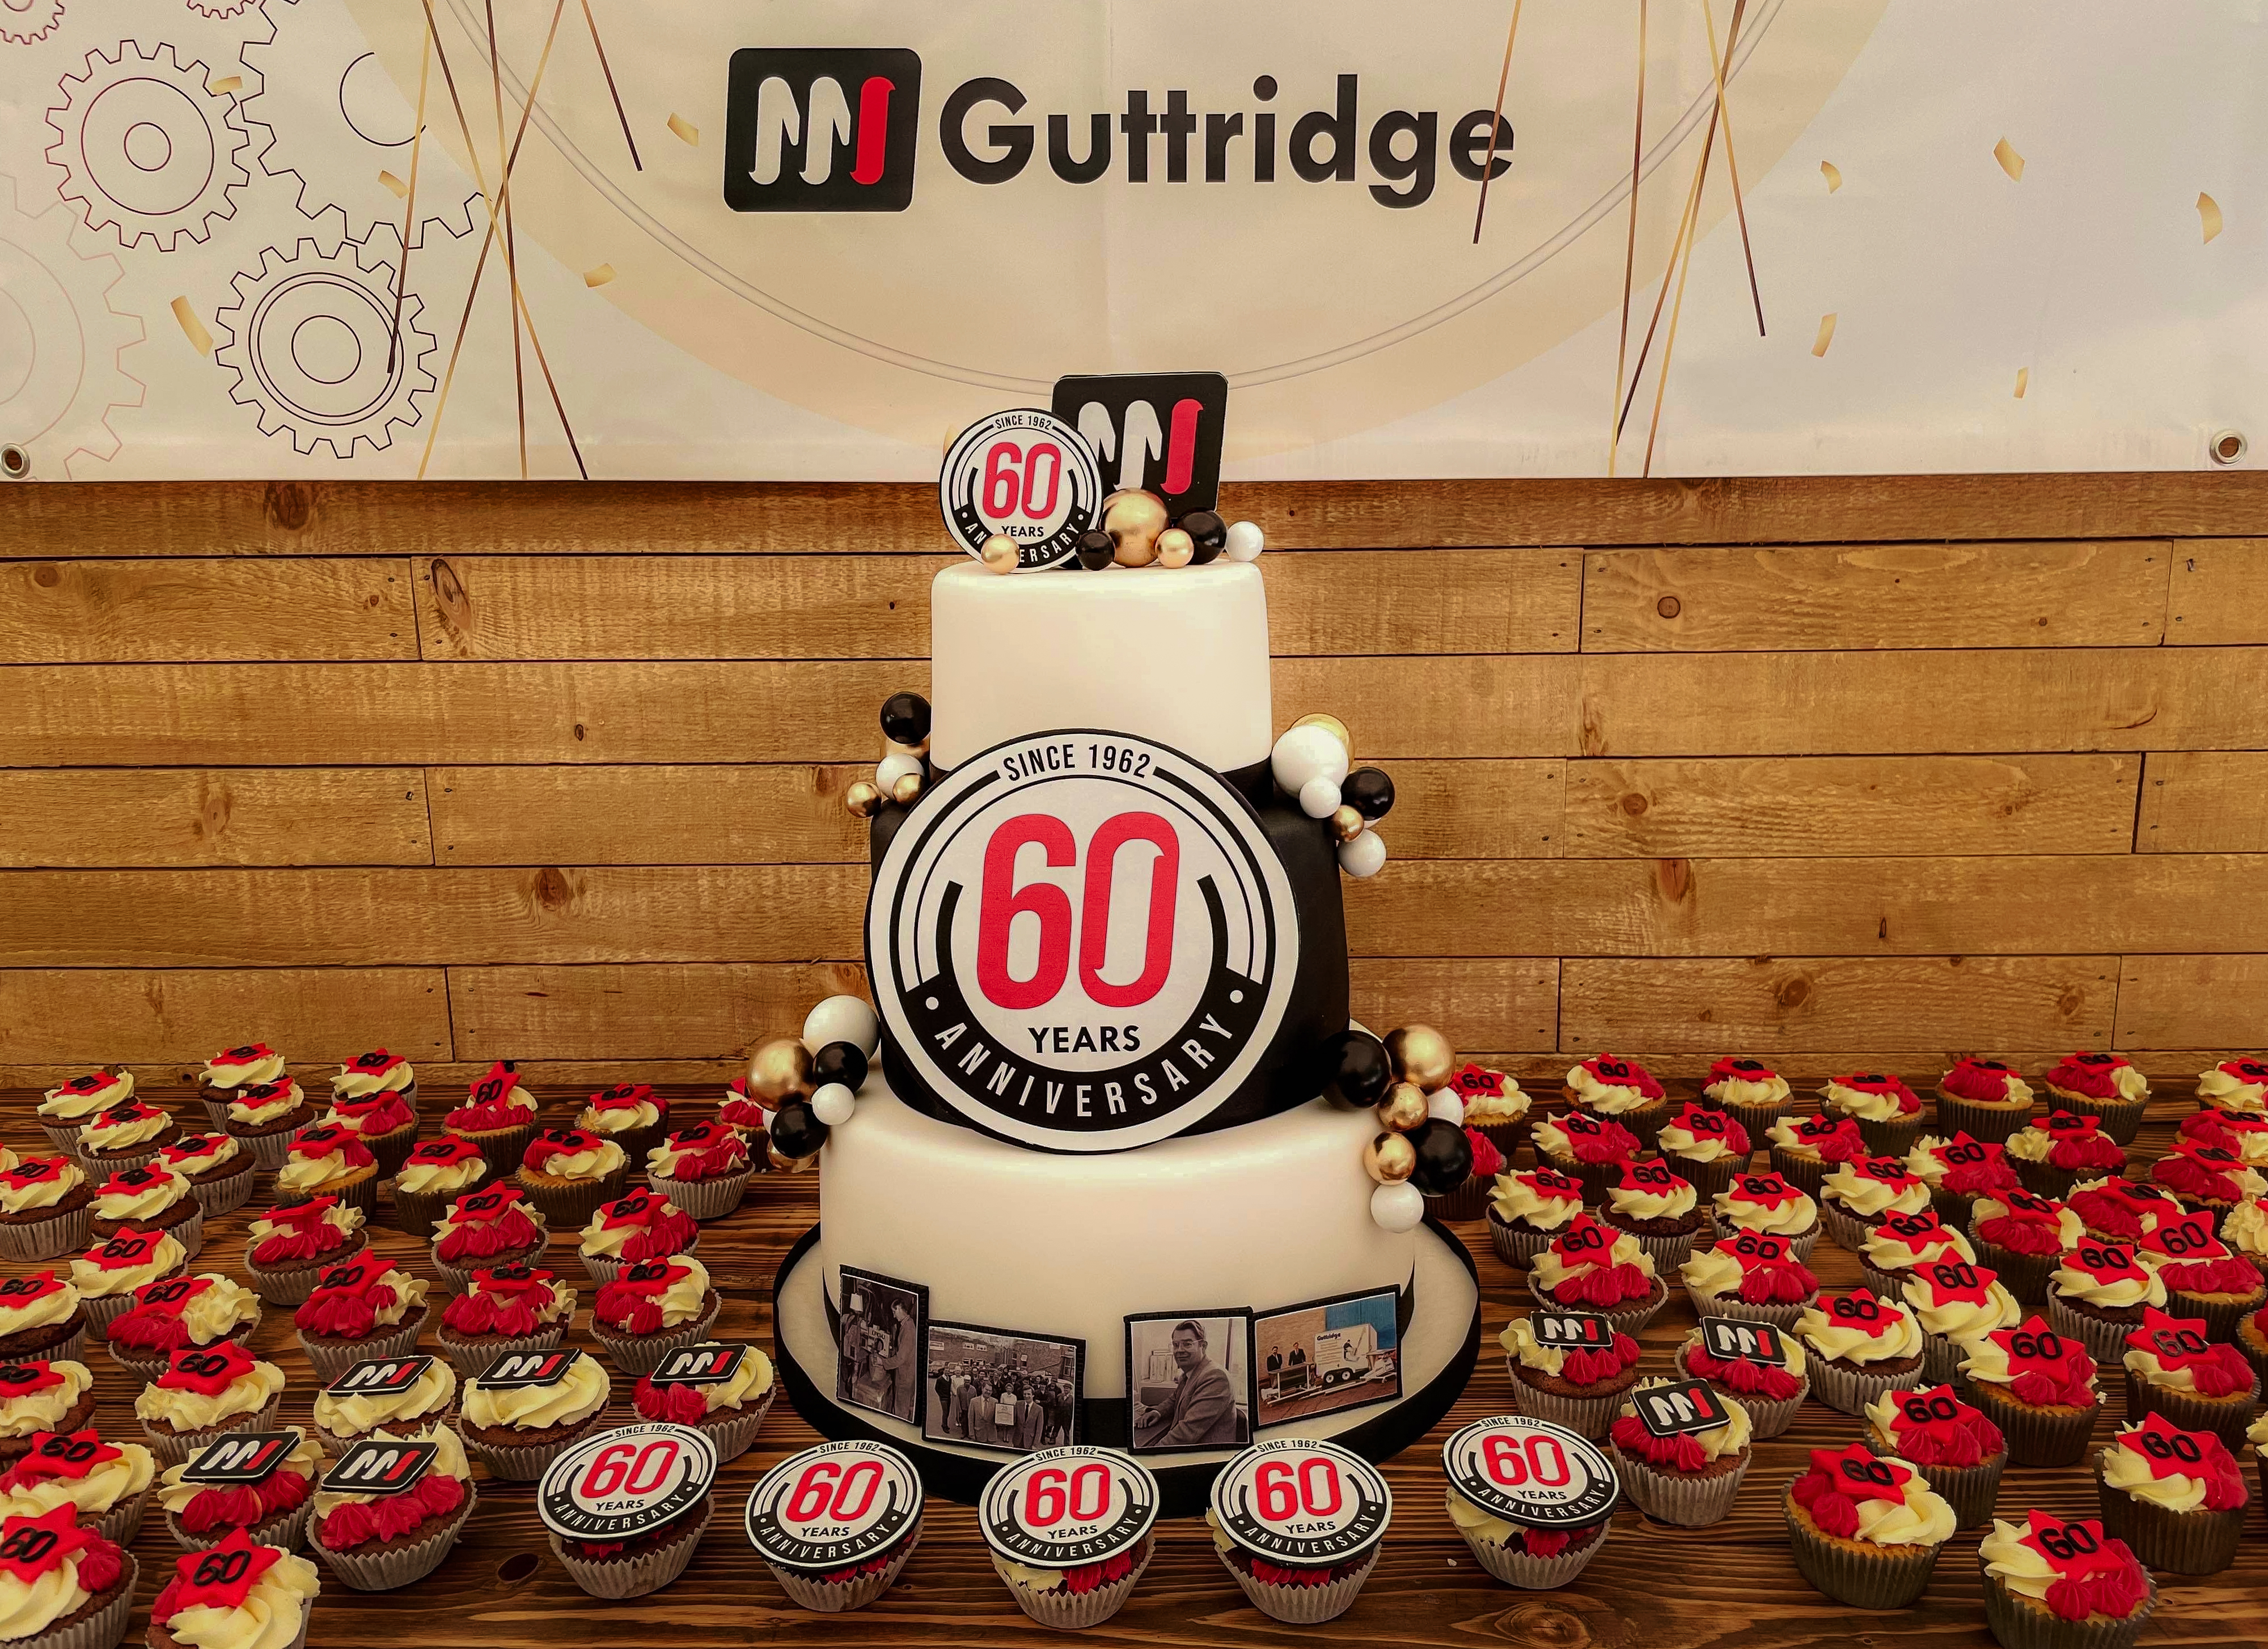 Guttridge a Spalding based manufacturer celebrates its 60th Anniversary.